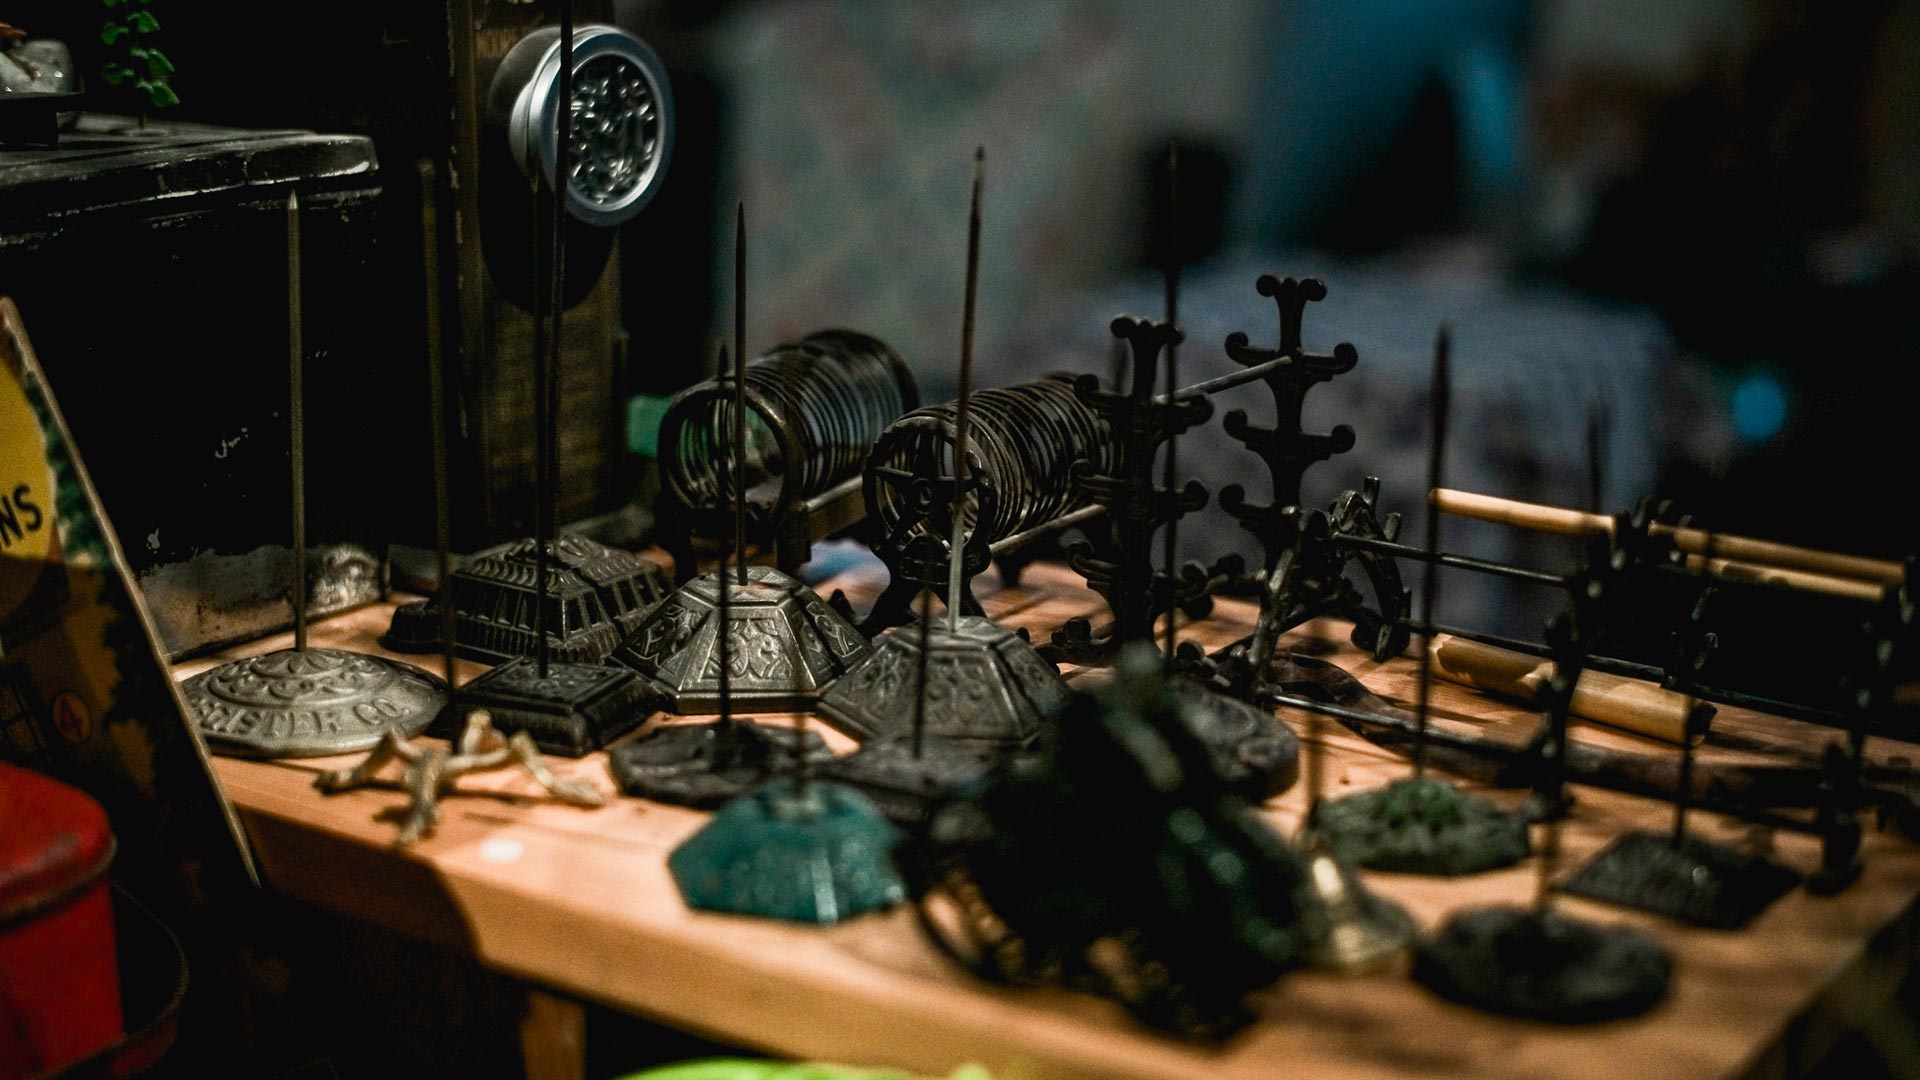 dorothy globus studio black metal objects on table